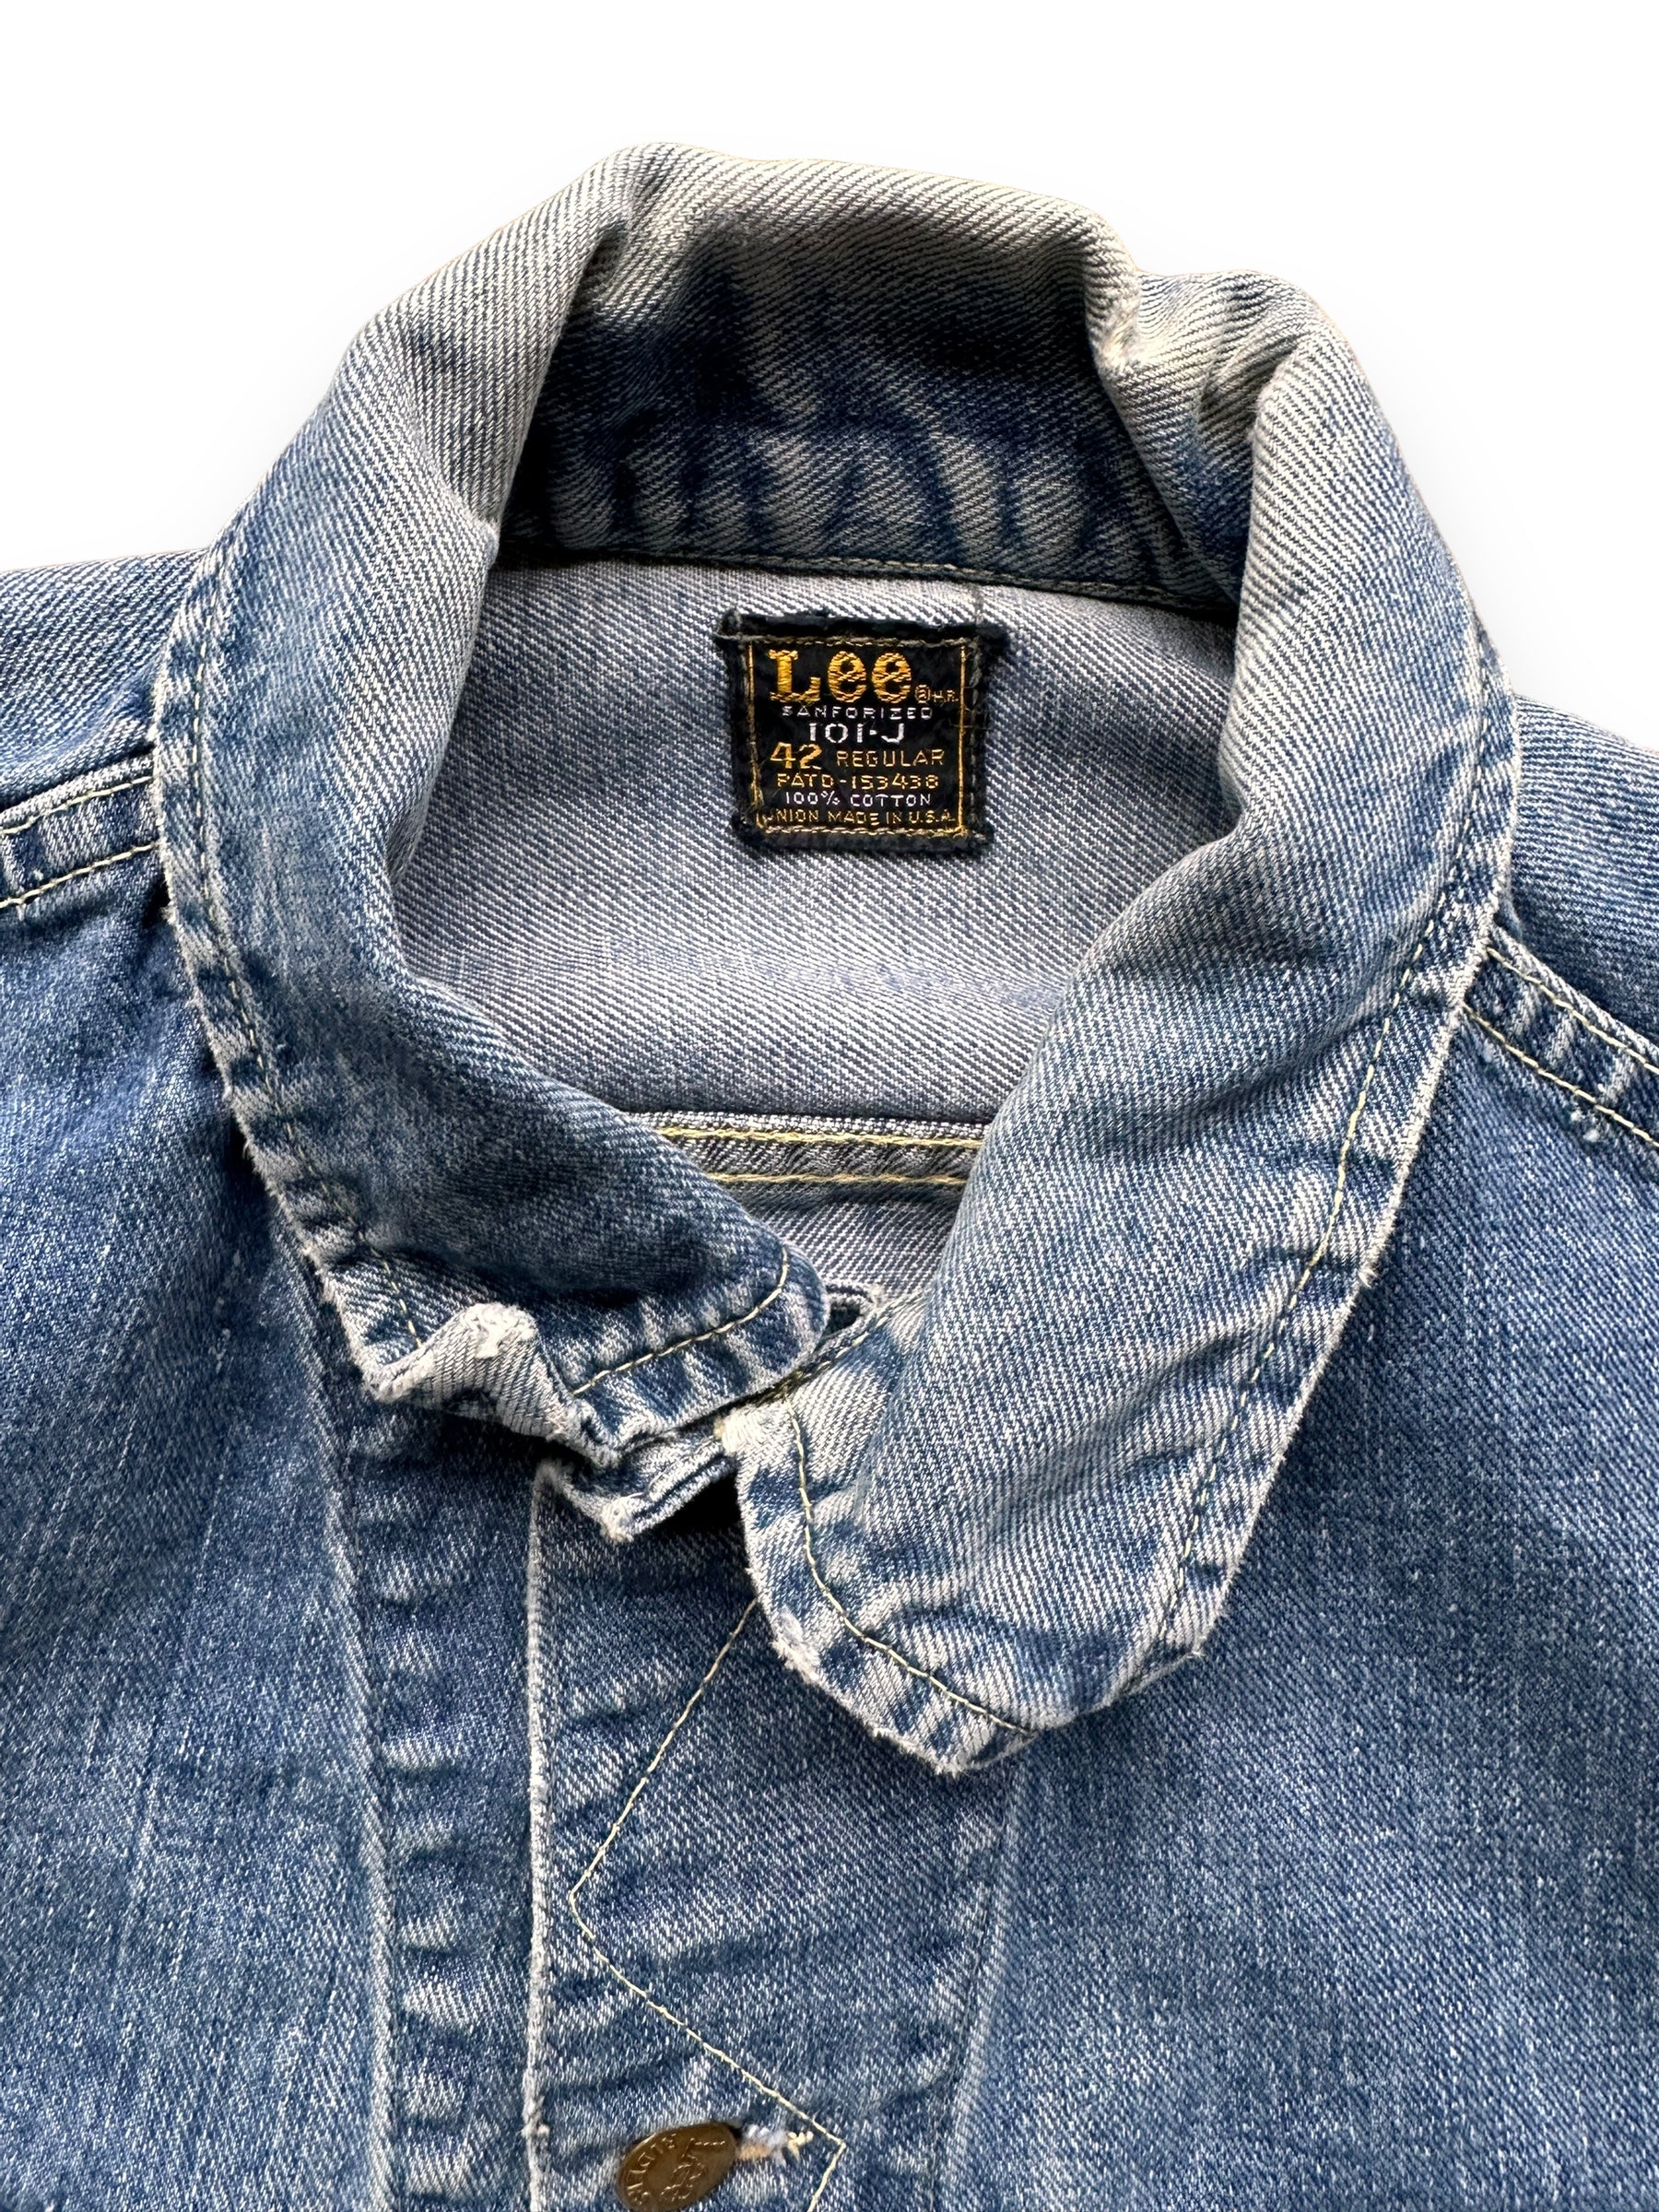 Size Tag View of Vintage Lee 101-J Denim Jacket SZ 42 | Vintage Denim Workwear Seattle | Seattle Vintage Denim